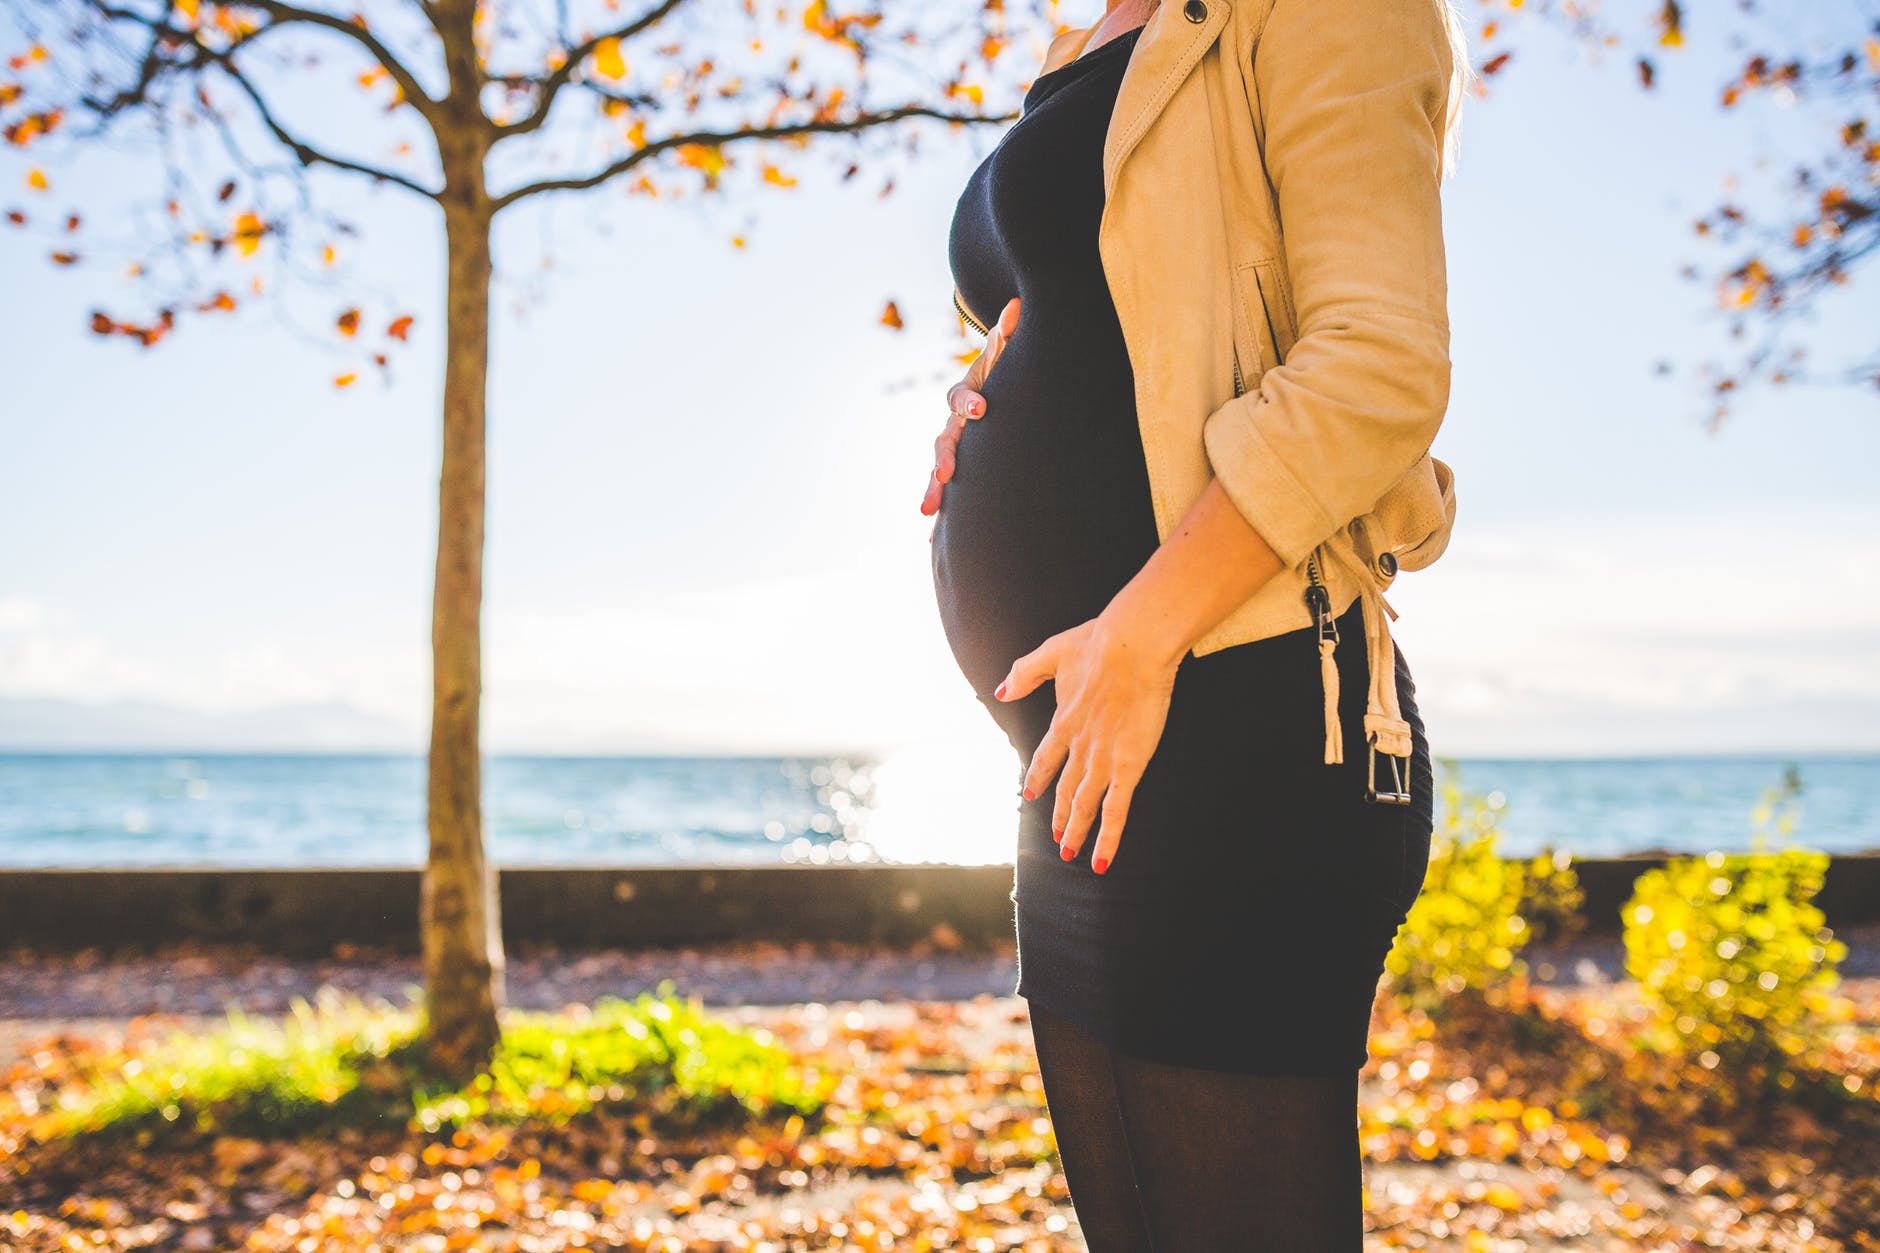 Pregnant? Learn more about Chorionic Villus Sampling (CVS)